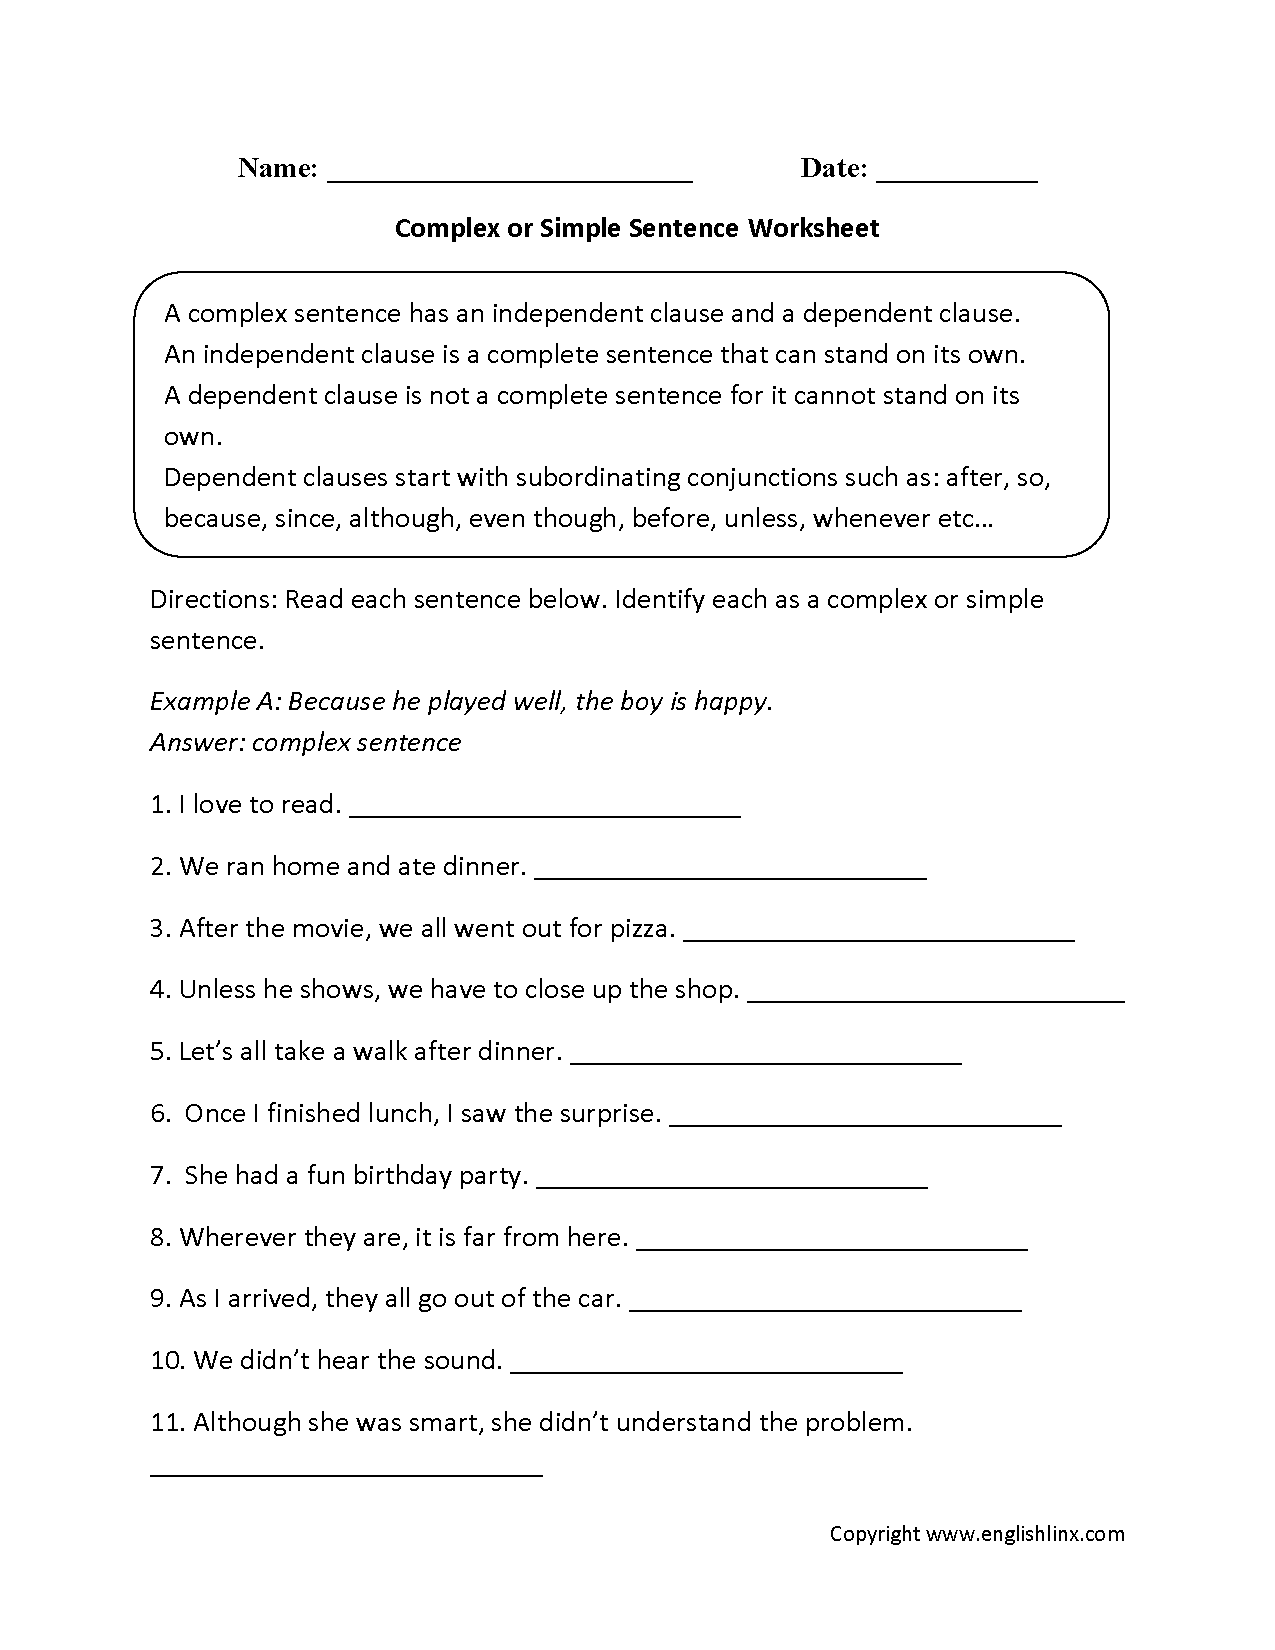 Printables Quiz On Types Of Sentences Simple Compound Complex Compound-complex homework complex sentences or simple sentence worksheet